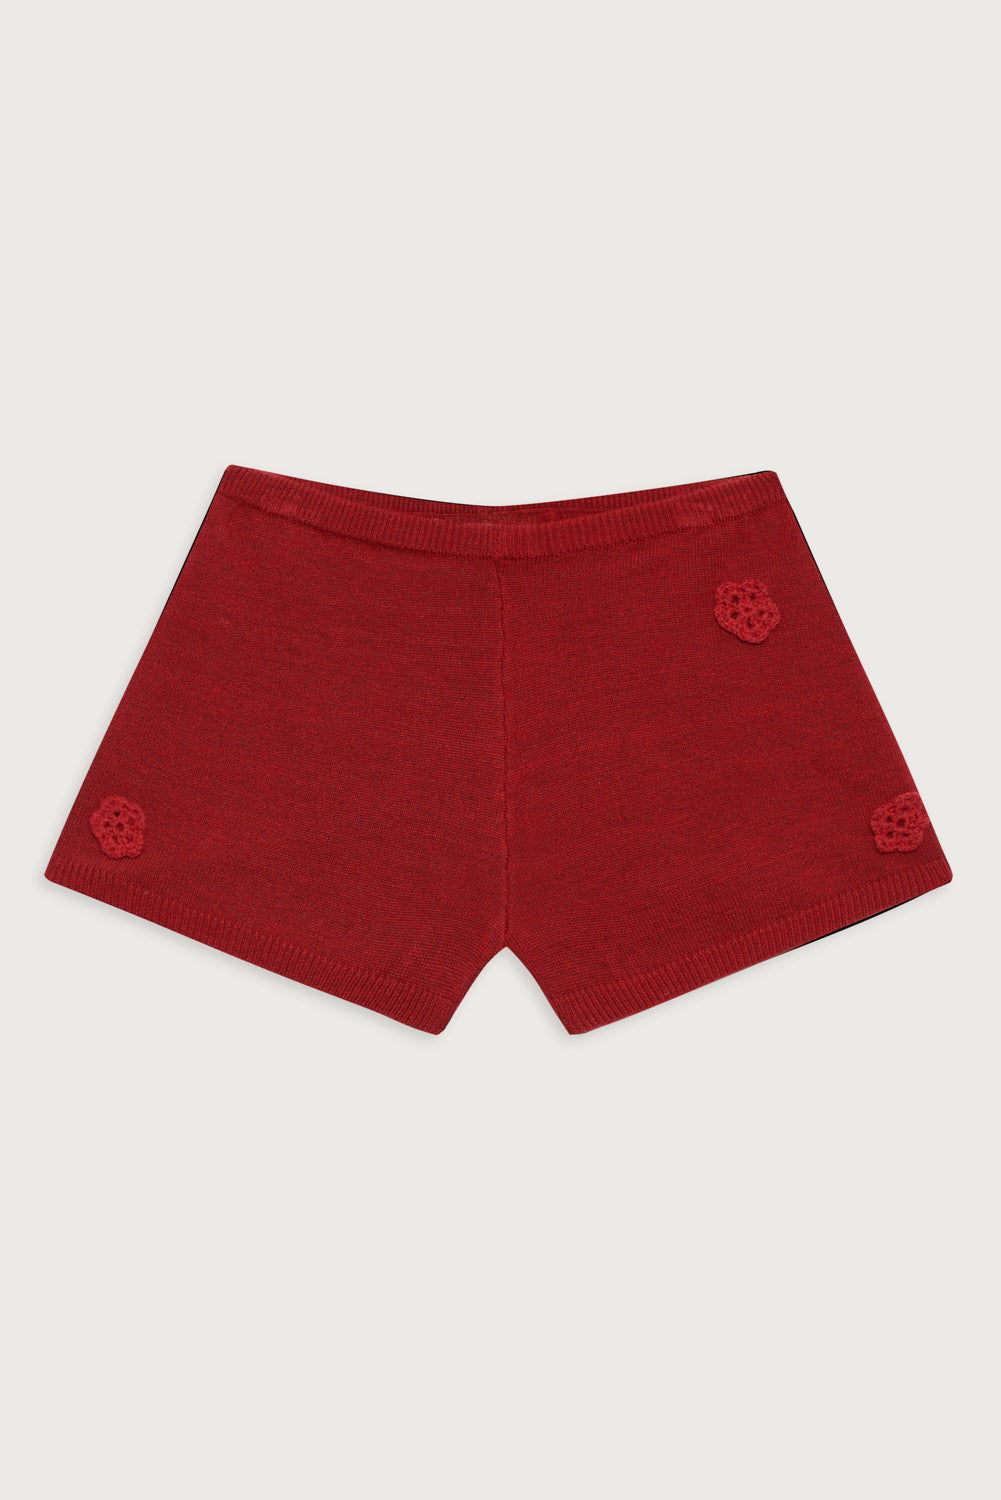 Jellybean Knit Cotton Shorts- Red – AnnaClaire's Boutique